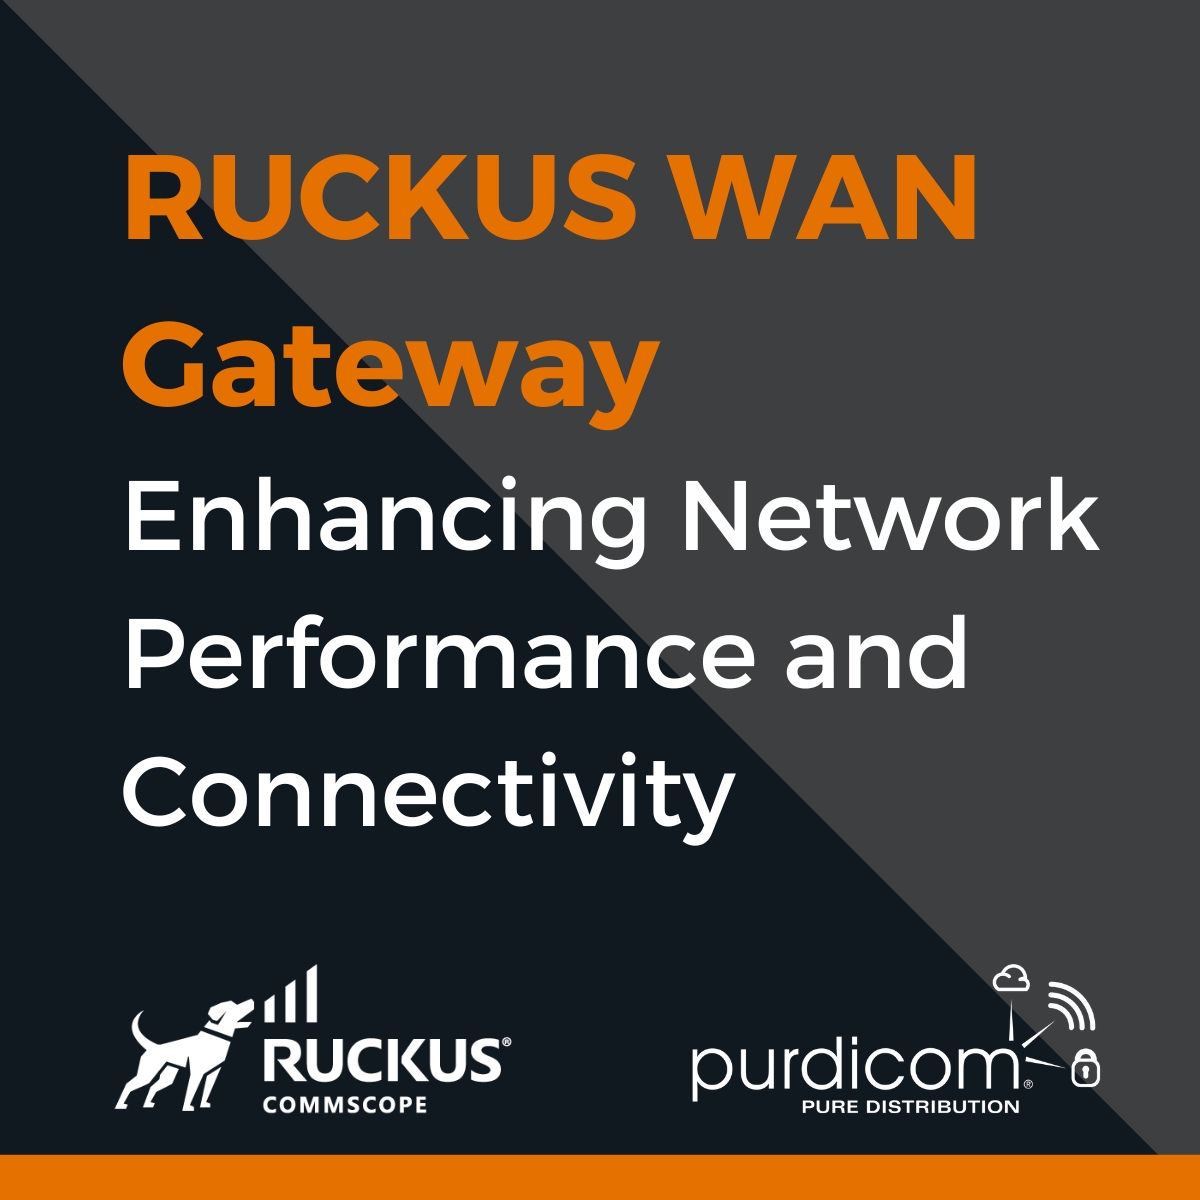 RUCKUS WAN Gateway Distributor